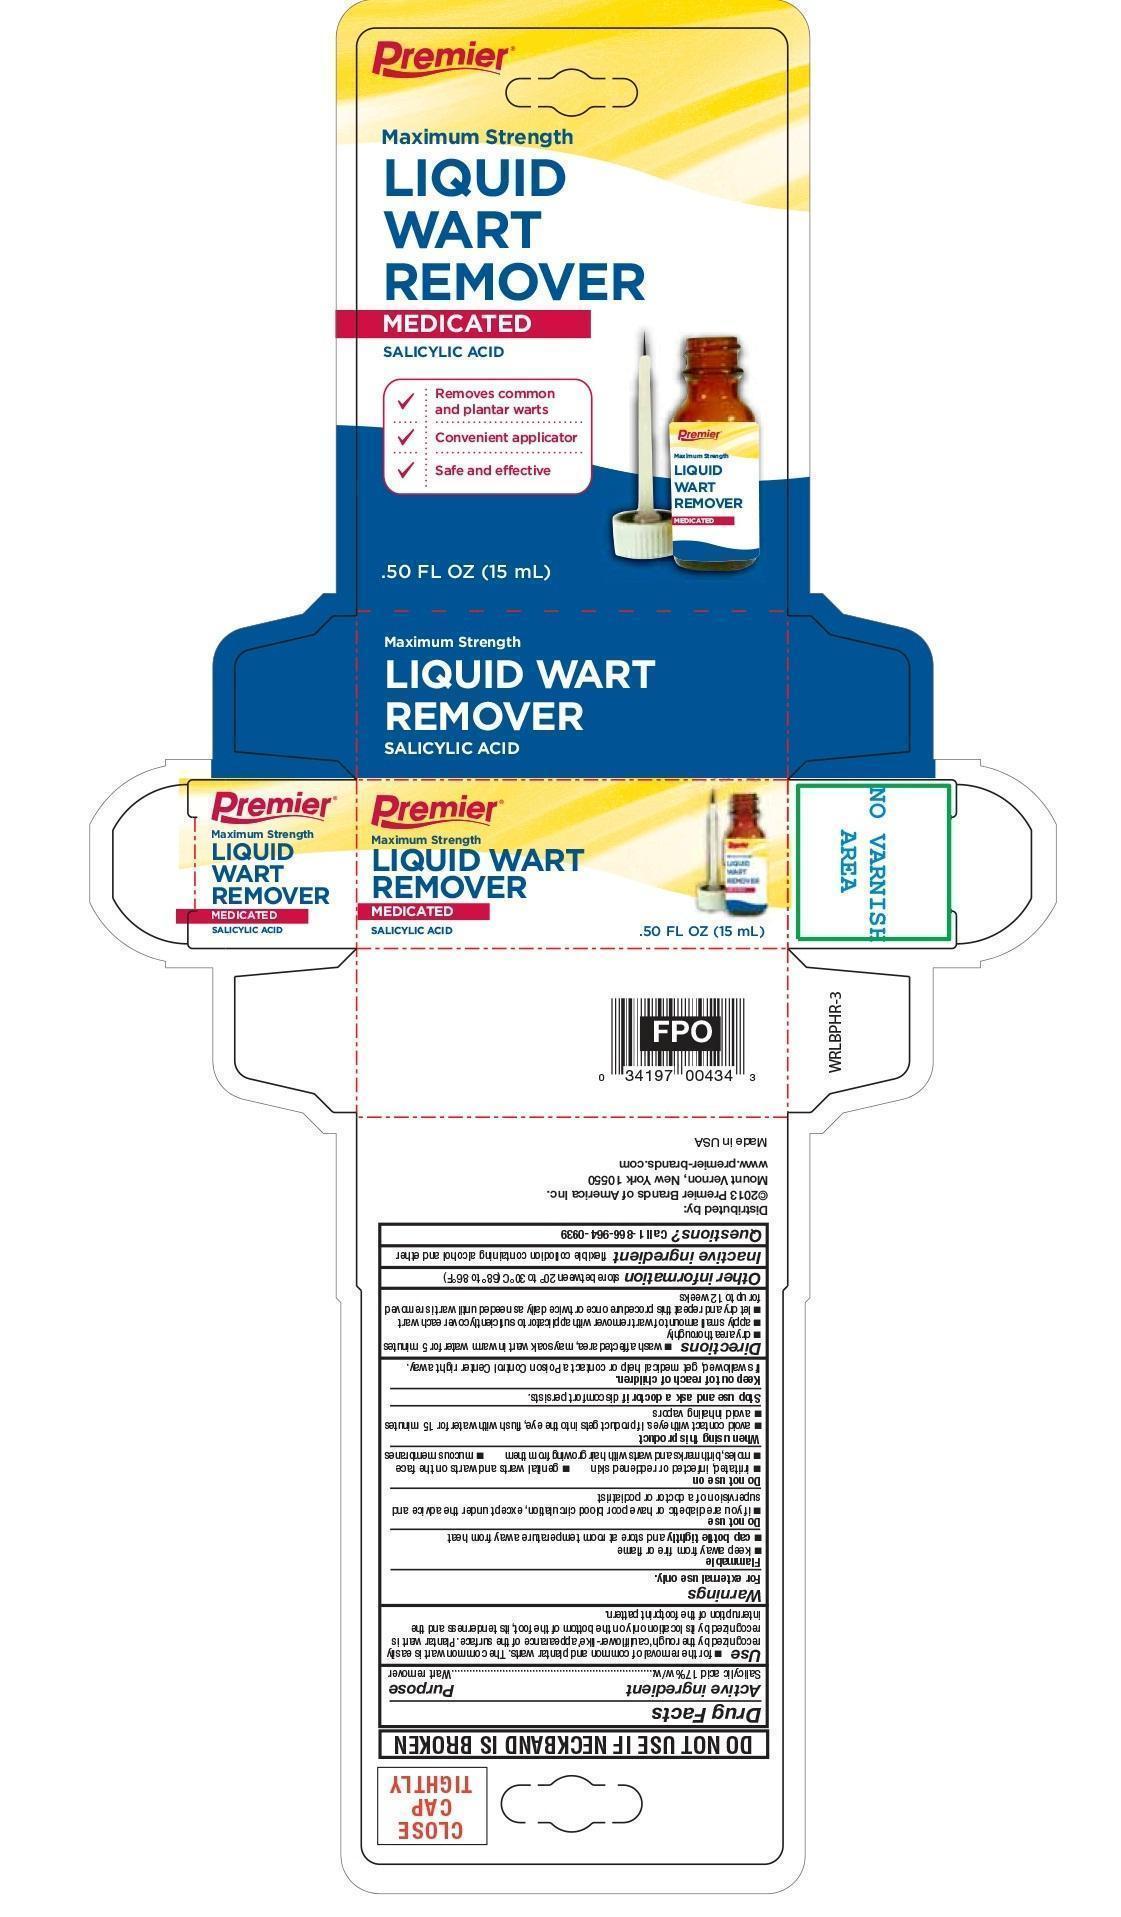 PB Wart Remover Liquid.jpg